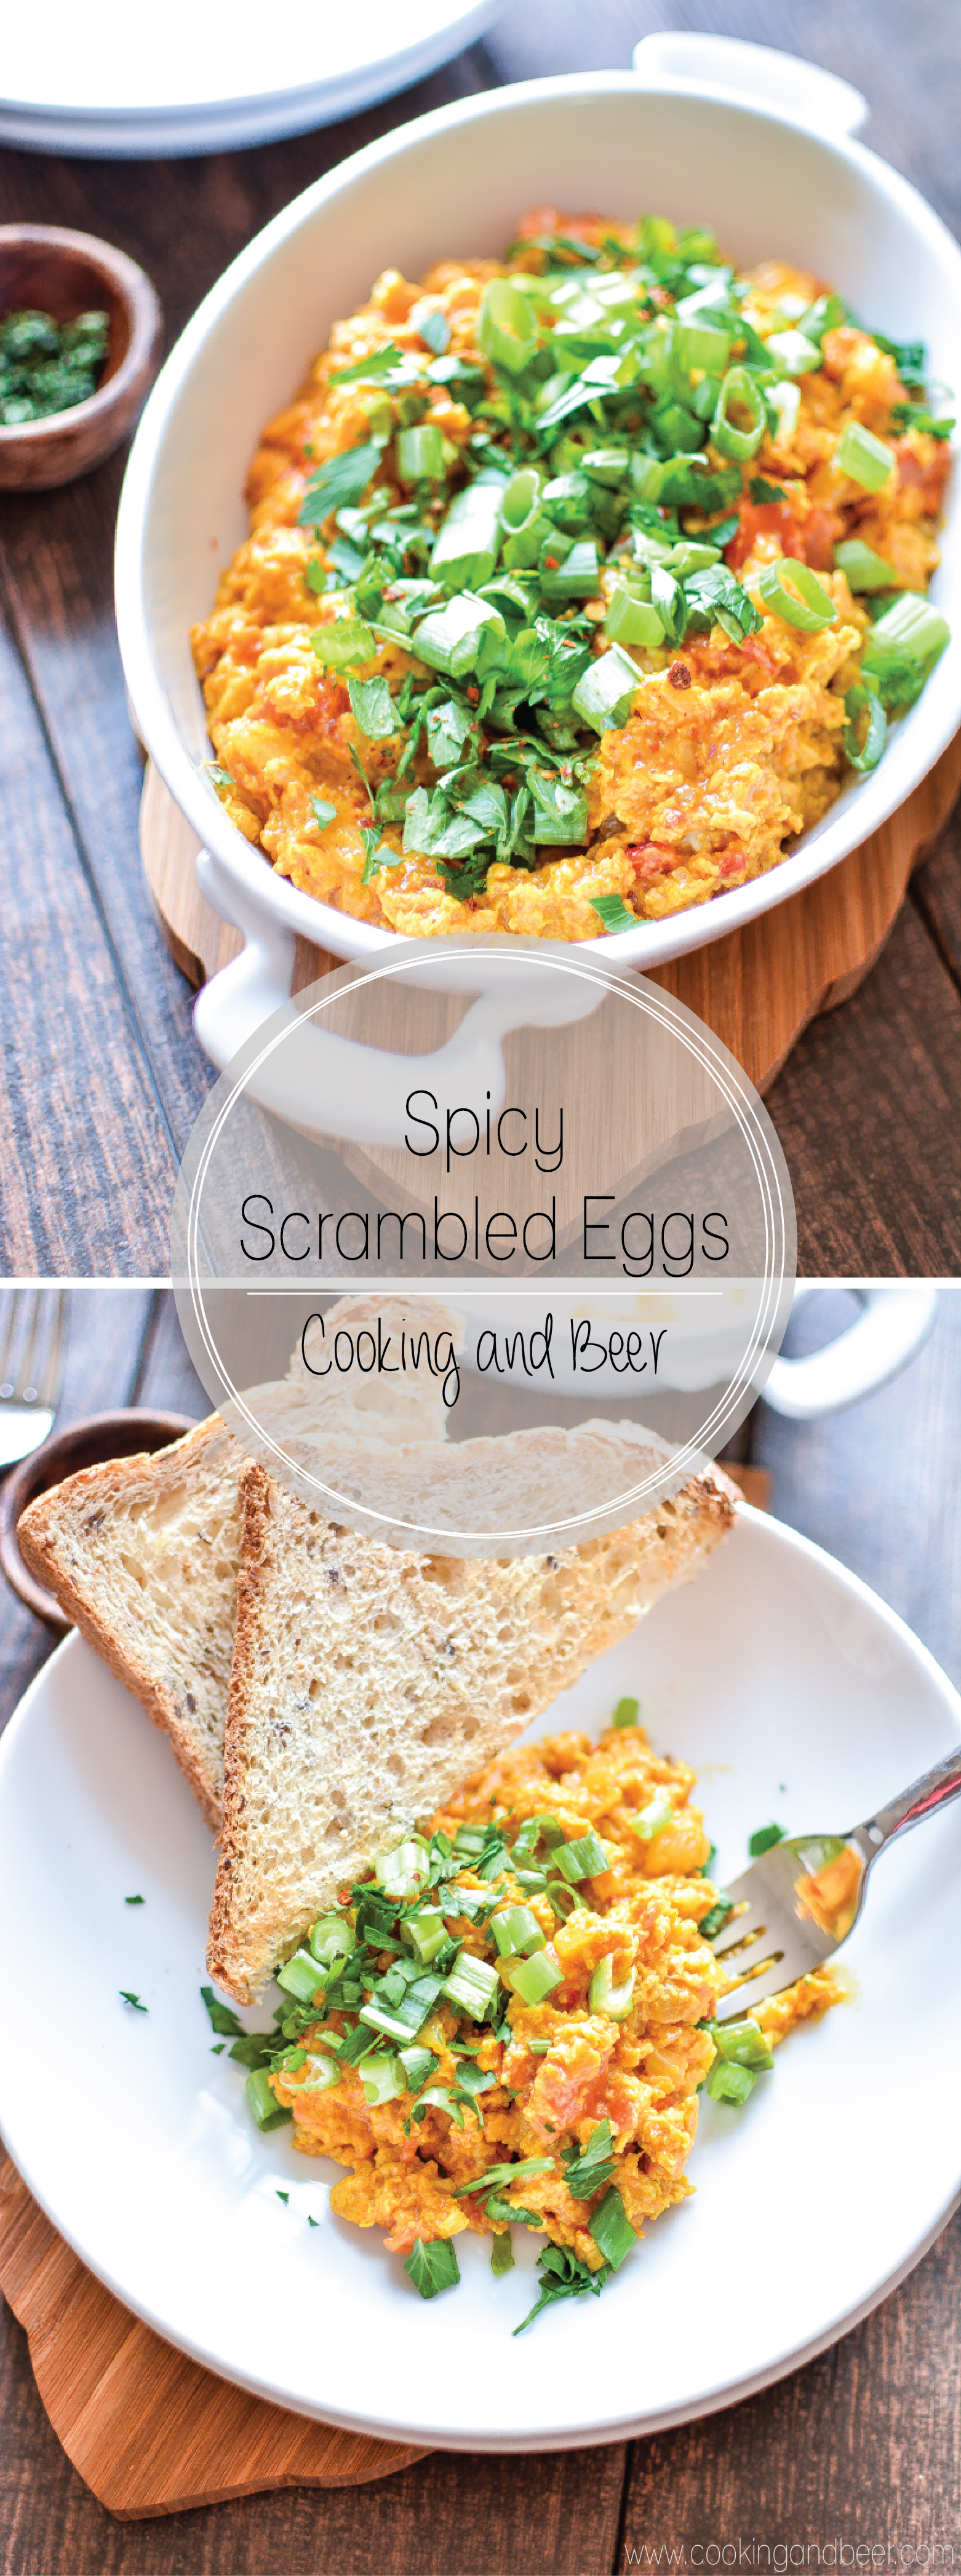 Spicy Scrambled Eggs